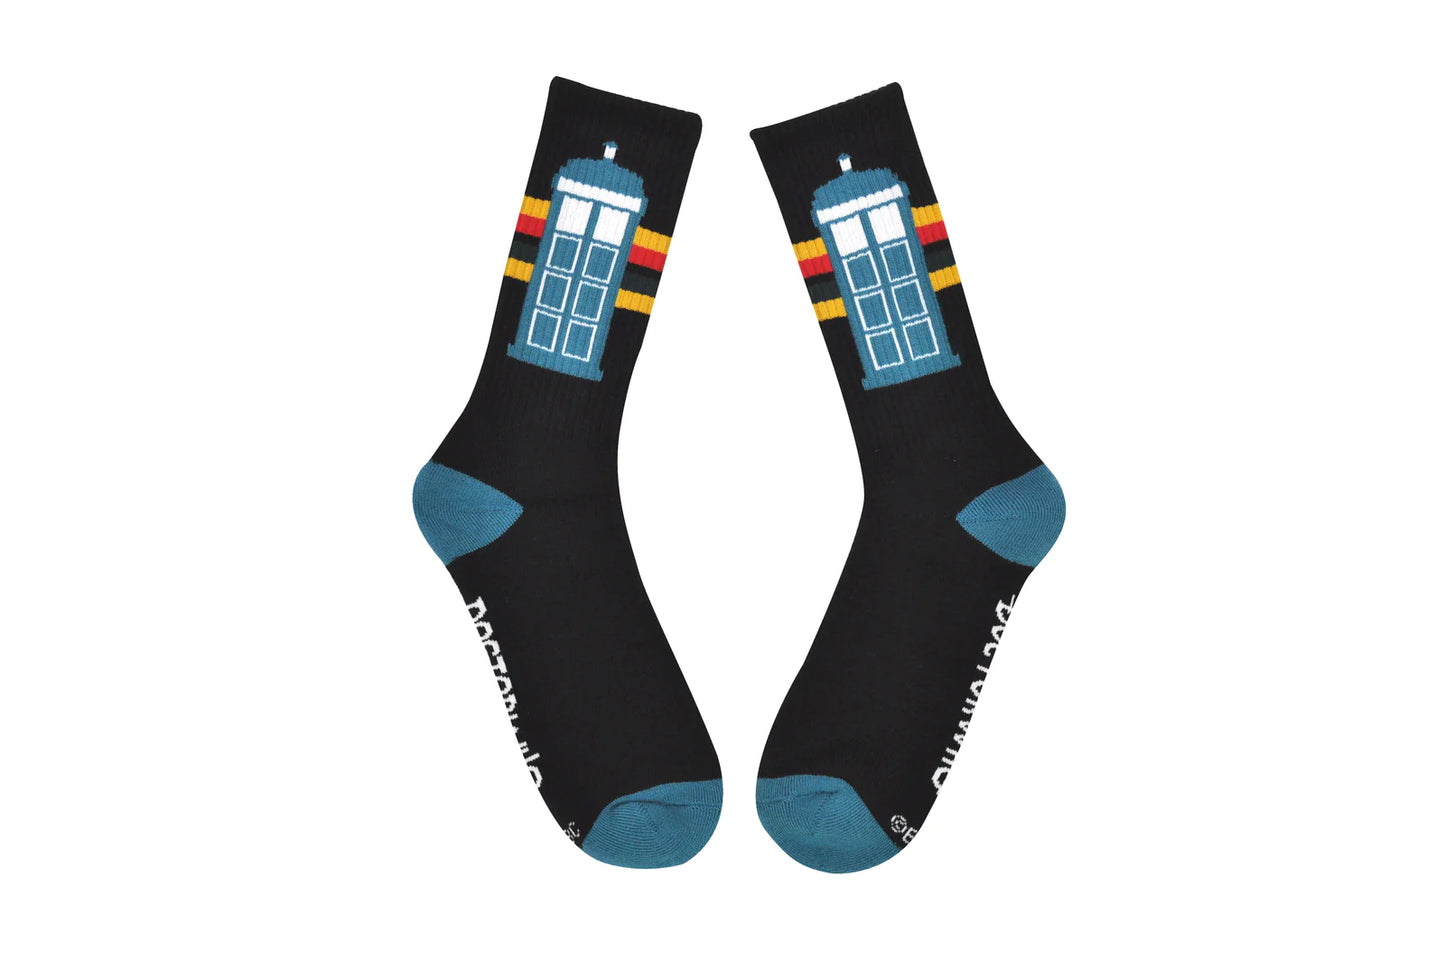 Doctor Who Crew Socks